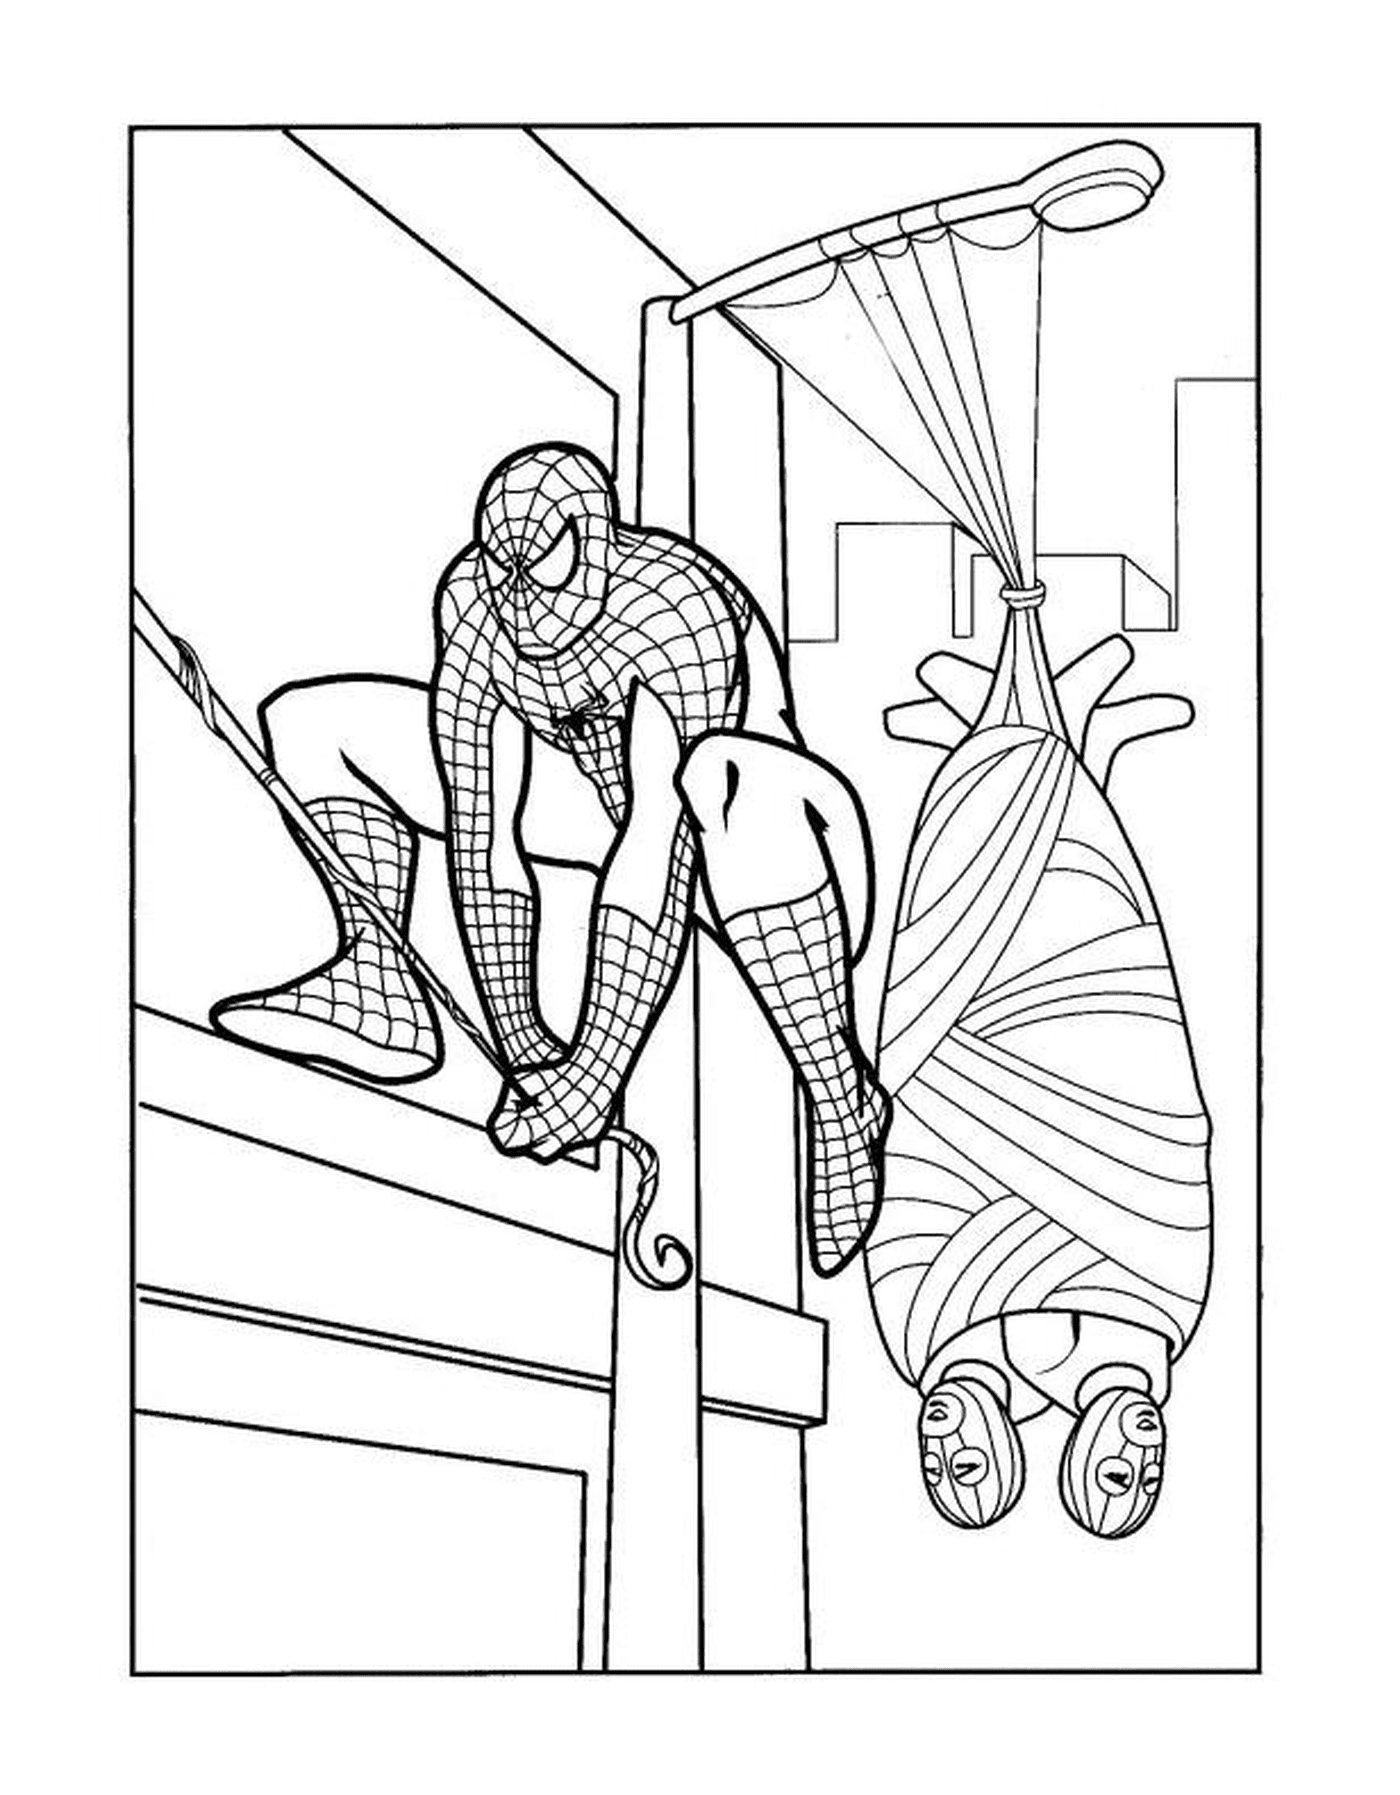   Spiderman escaladant un immeuble 